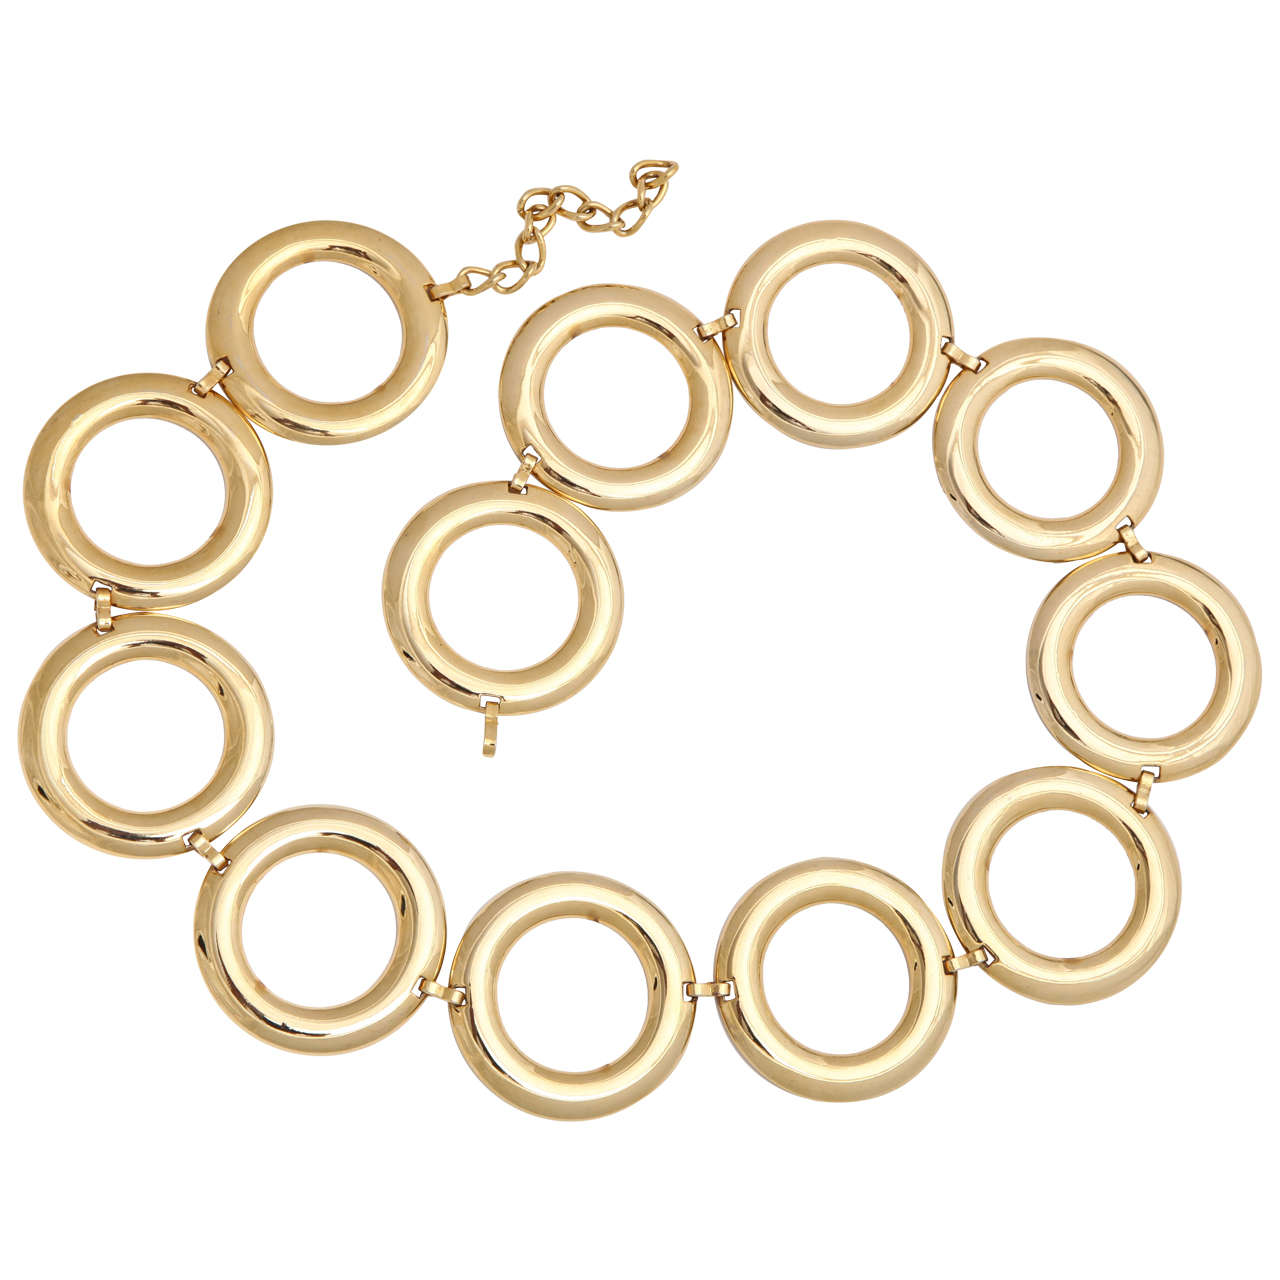 1960s "Gold" Circle Belt, Costume Jewelry